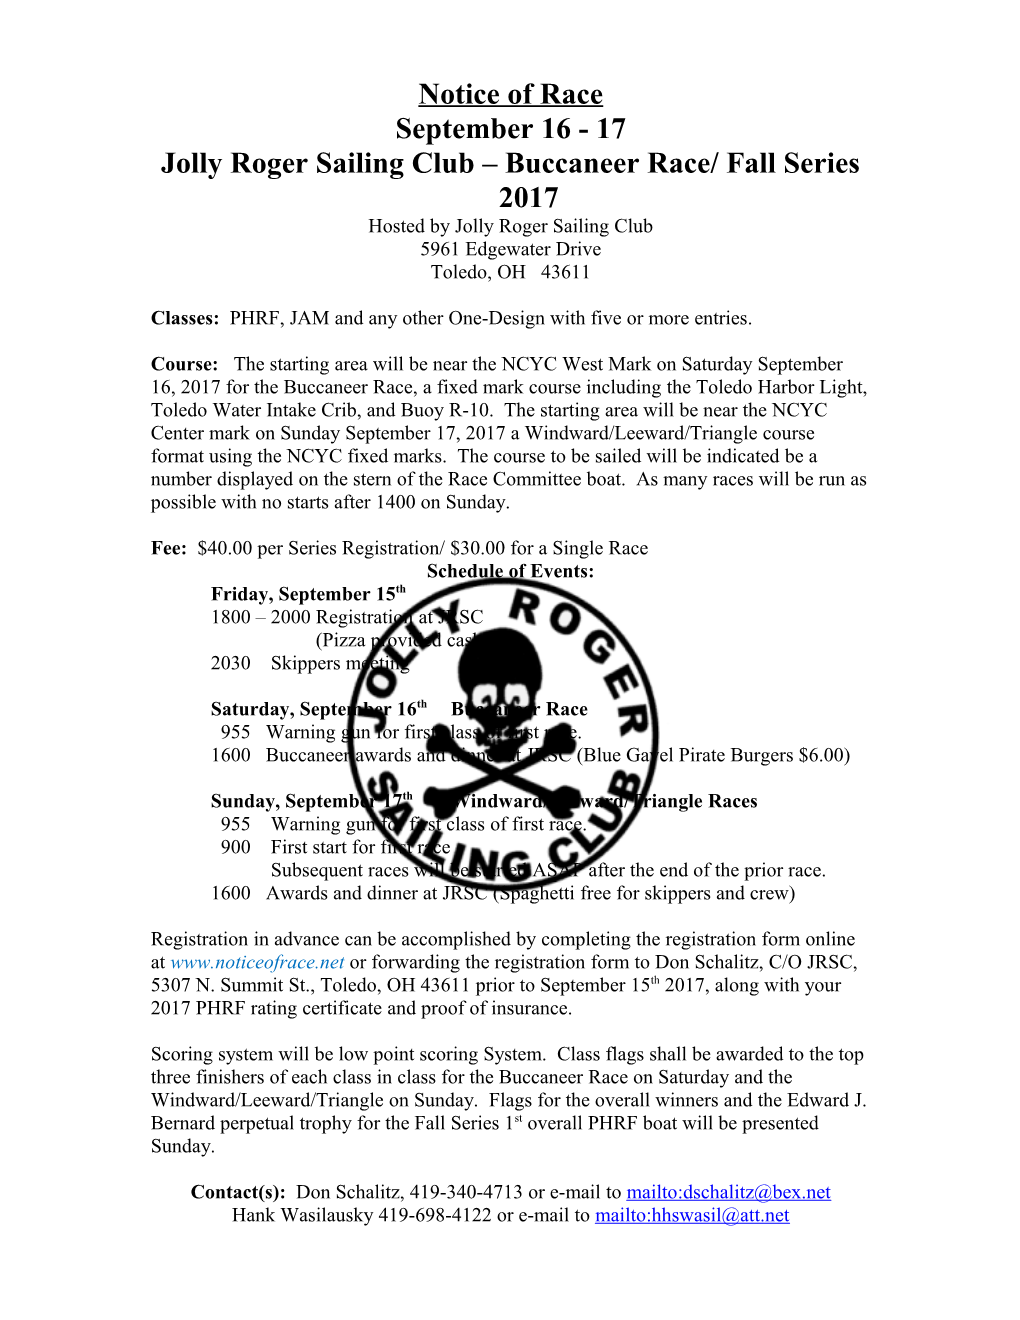 Jolly Roger Sailing Club Buccaneer Race/ Fall Series 2017